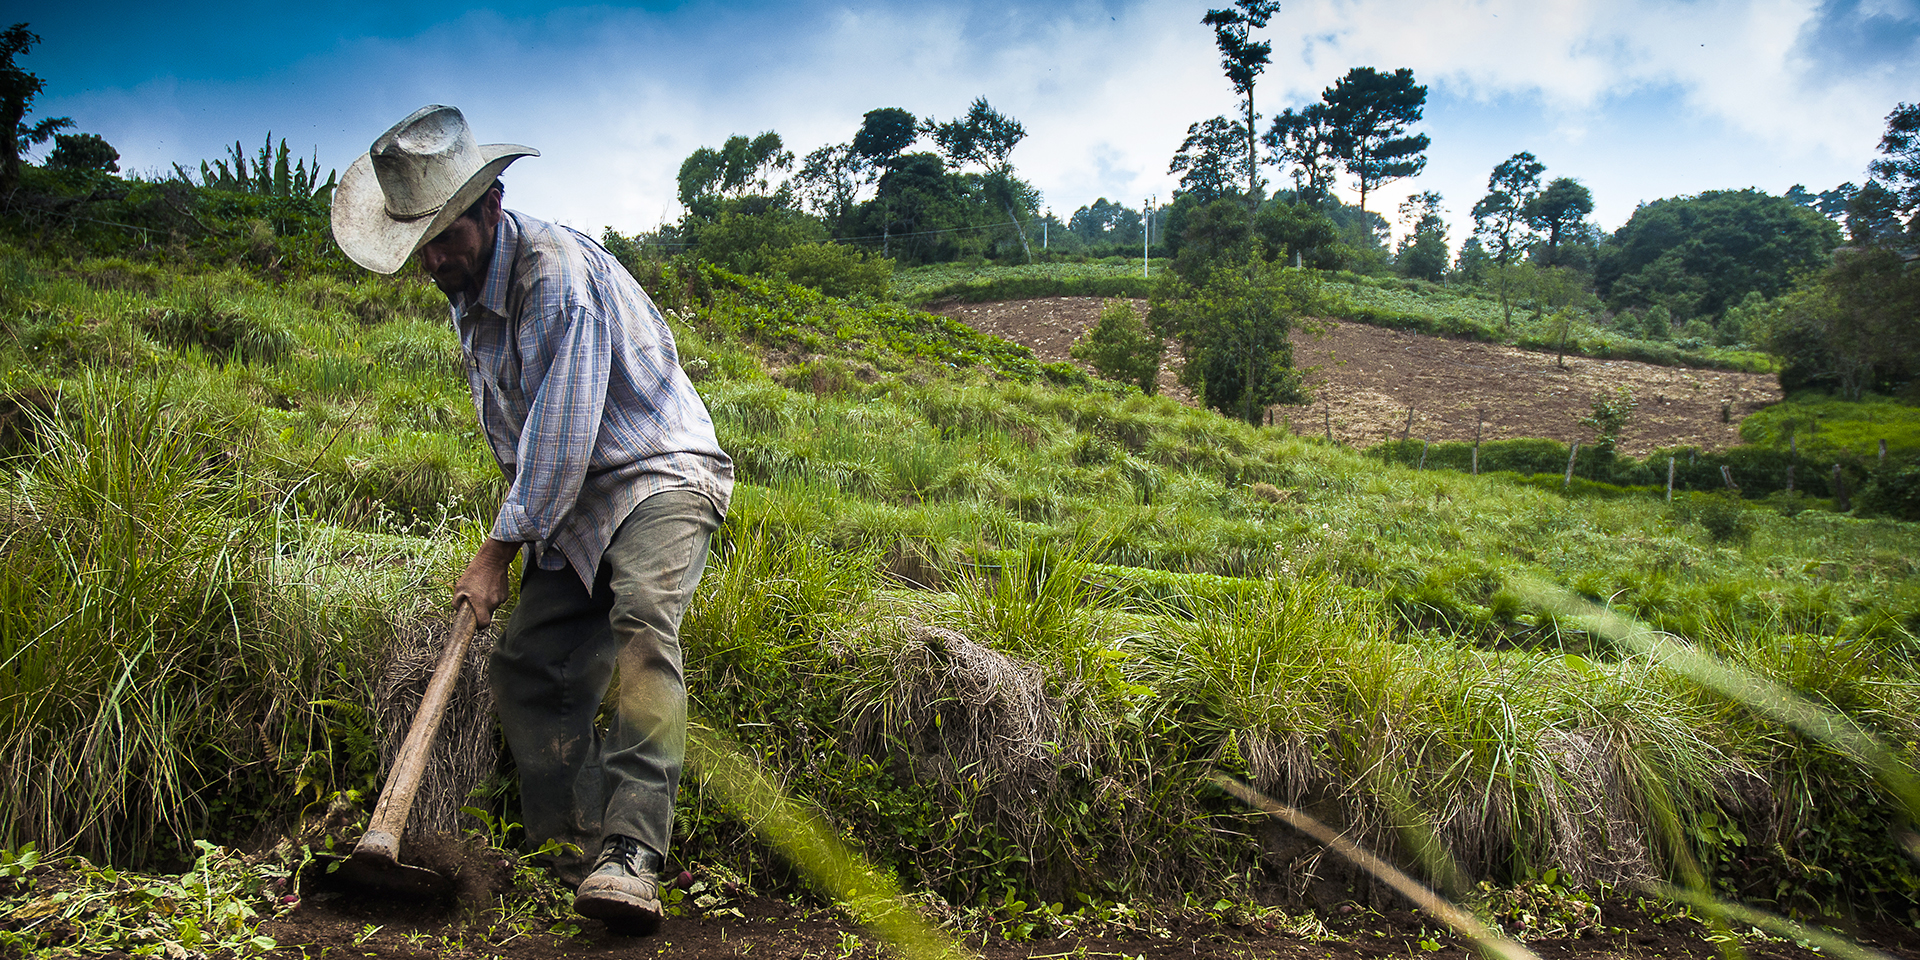 A farmer tends to his fields in El Salvador